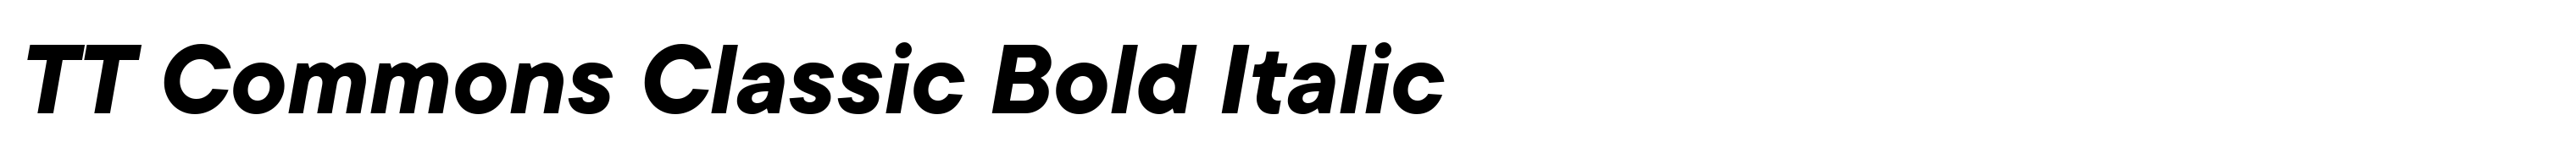 TT Commons Classic Bold Italic